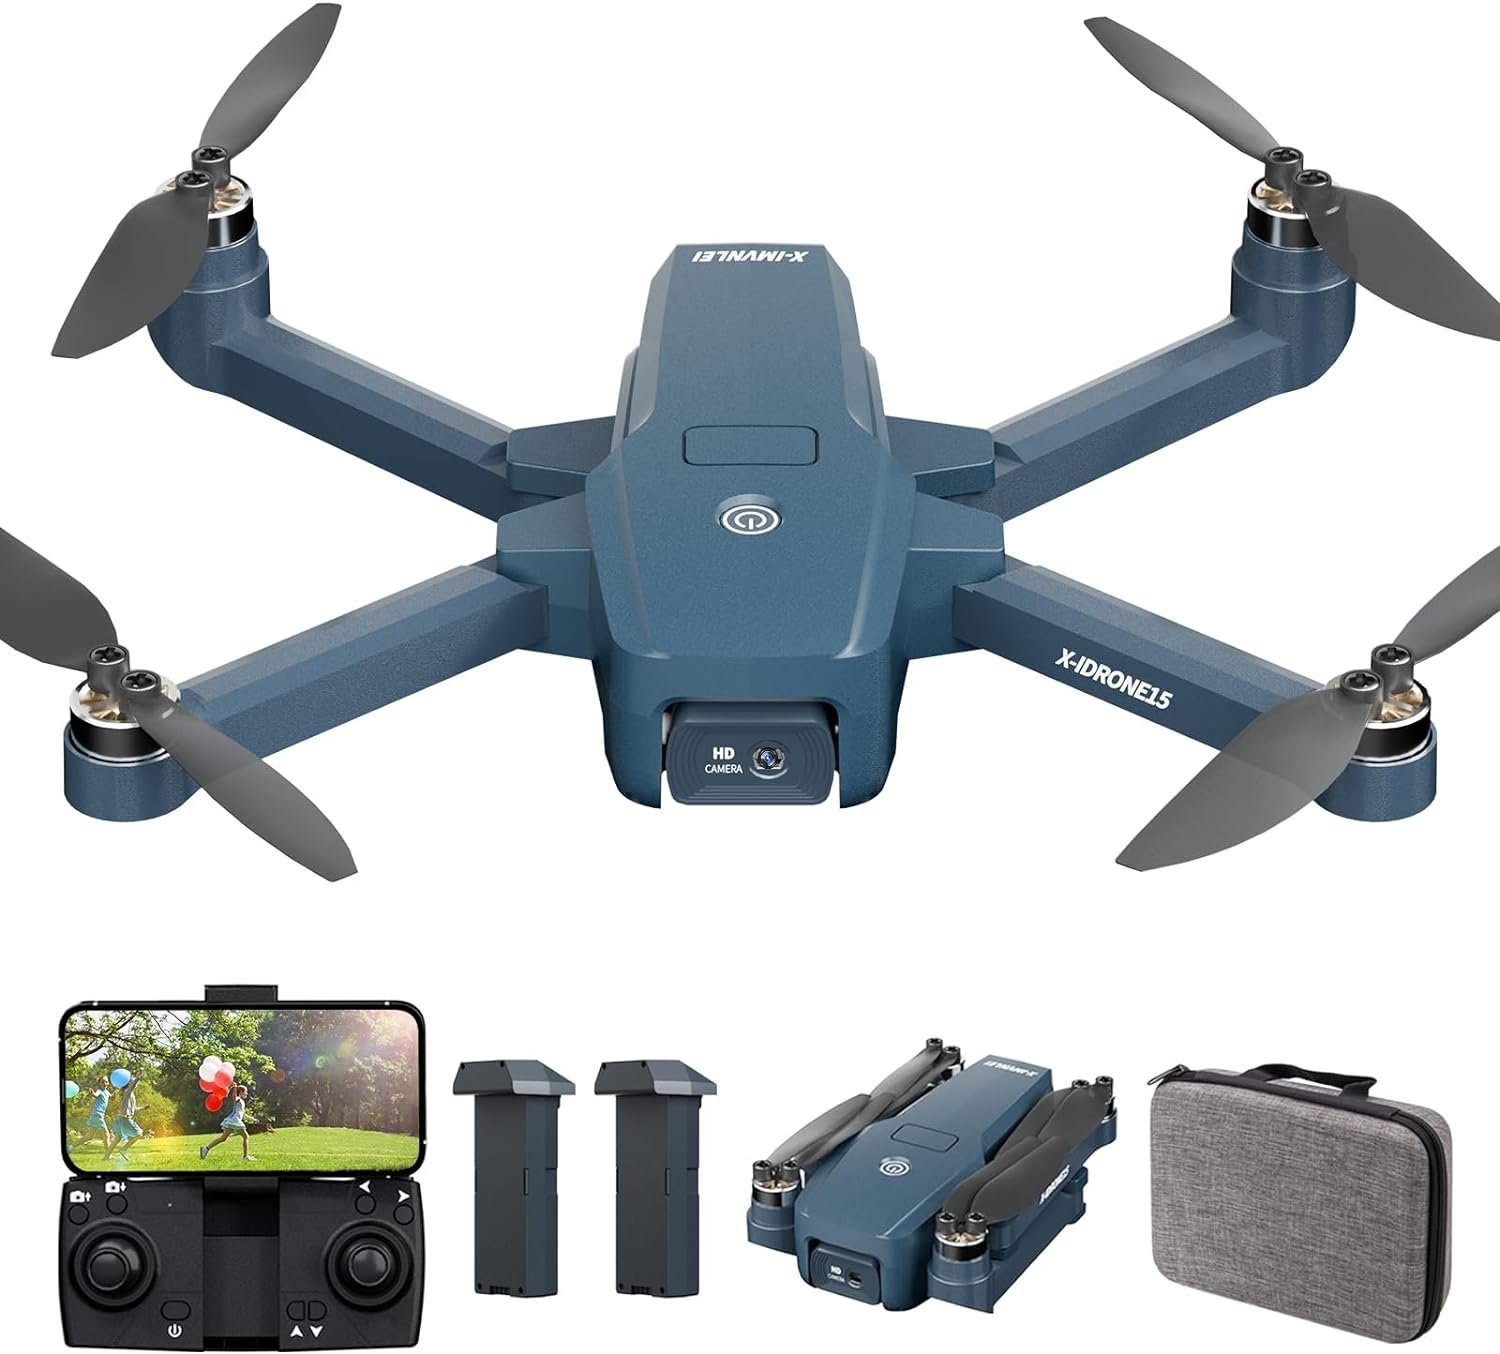 X-IMVNLEI Fernbedienung Professional WiFi Video RC-Quadcopter) FPV Erwachsene Drohne (1080P, 5G